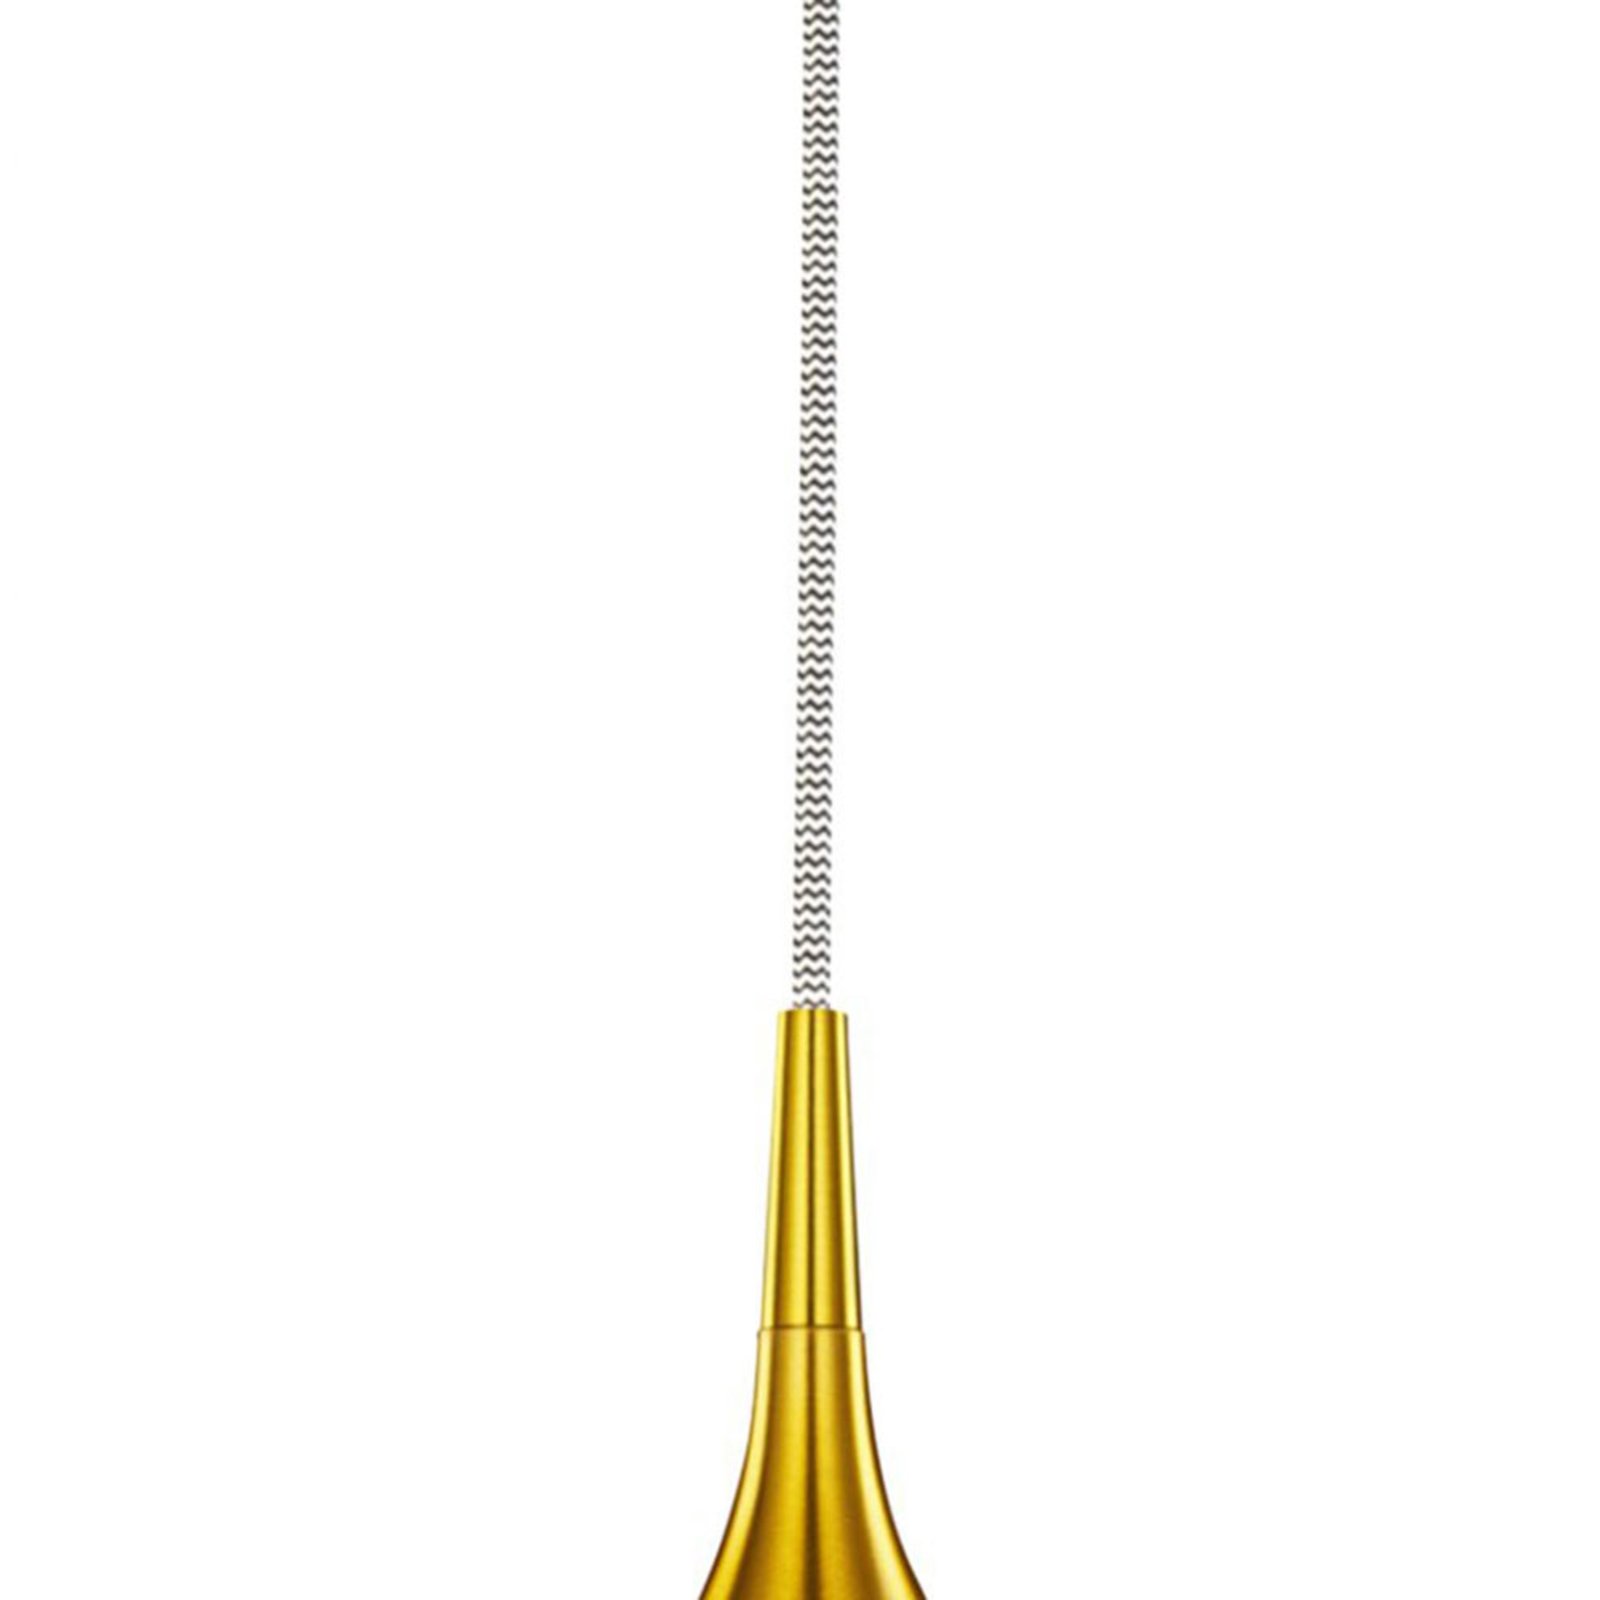 Lampada sospensione Vibrant Ø 12cm, oro